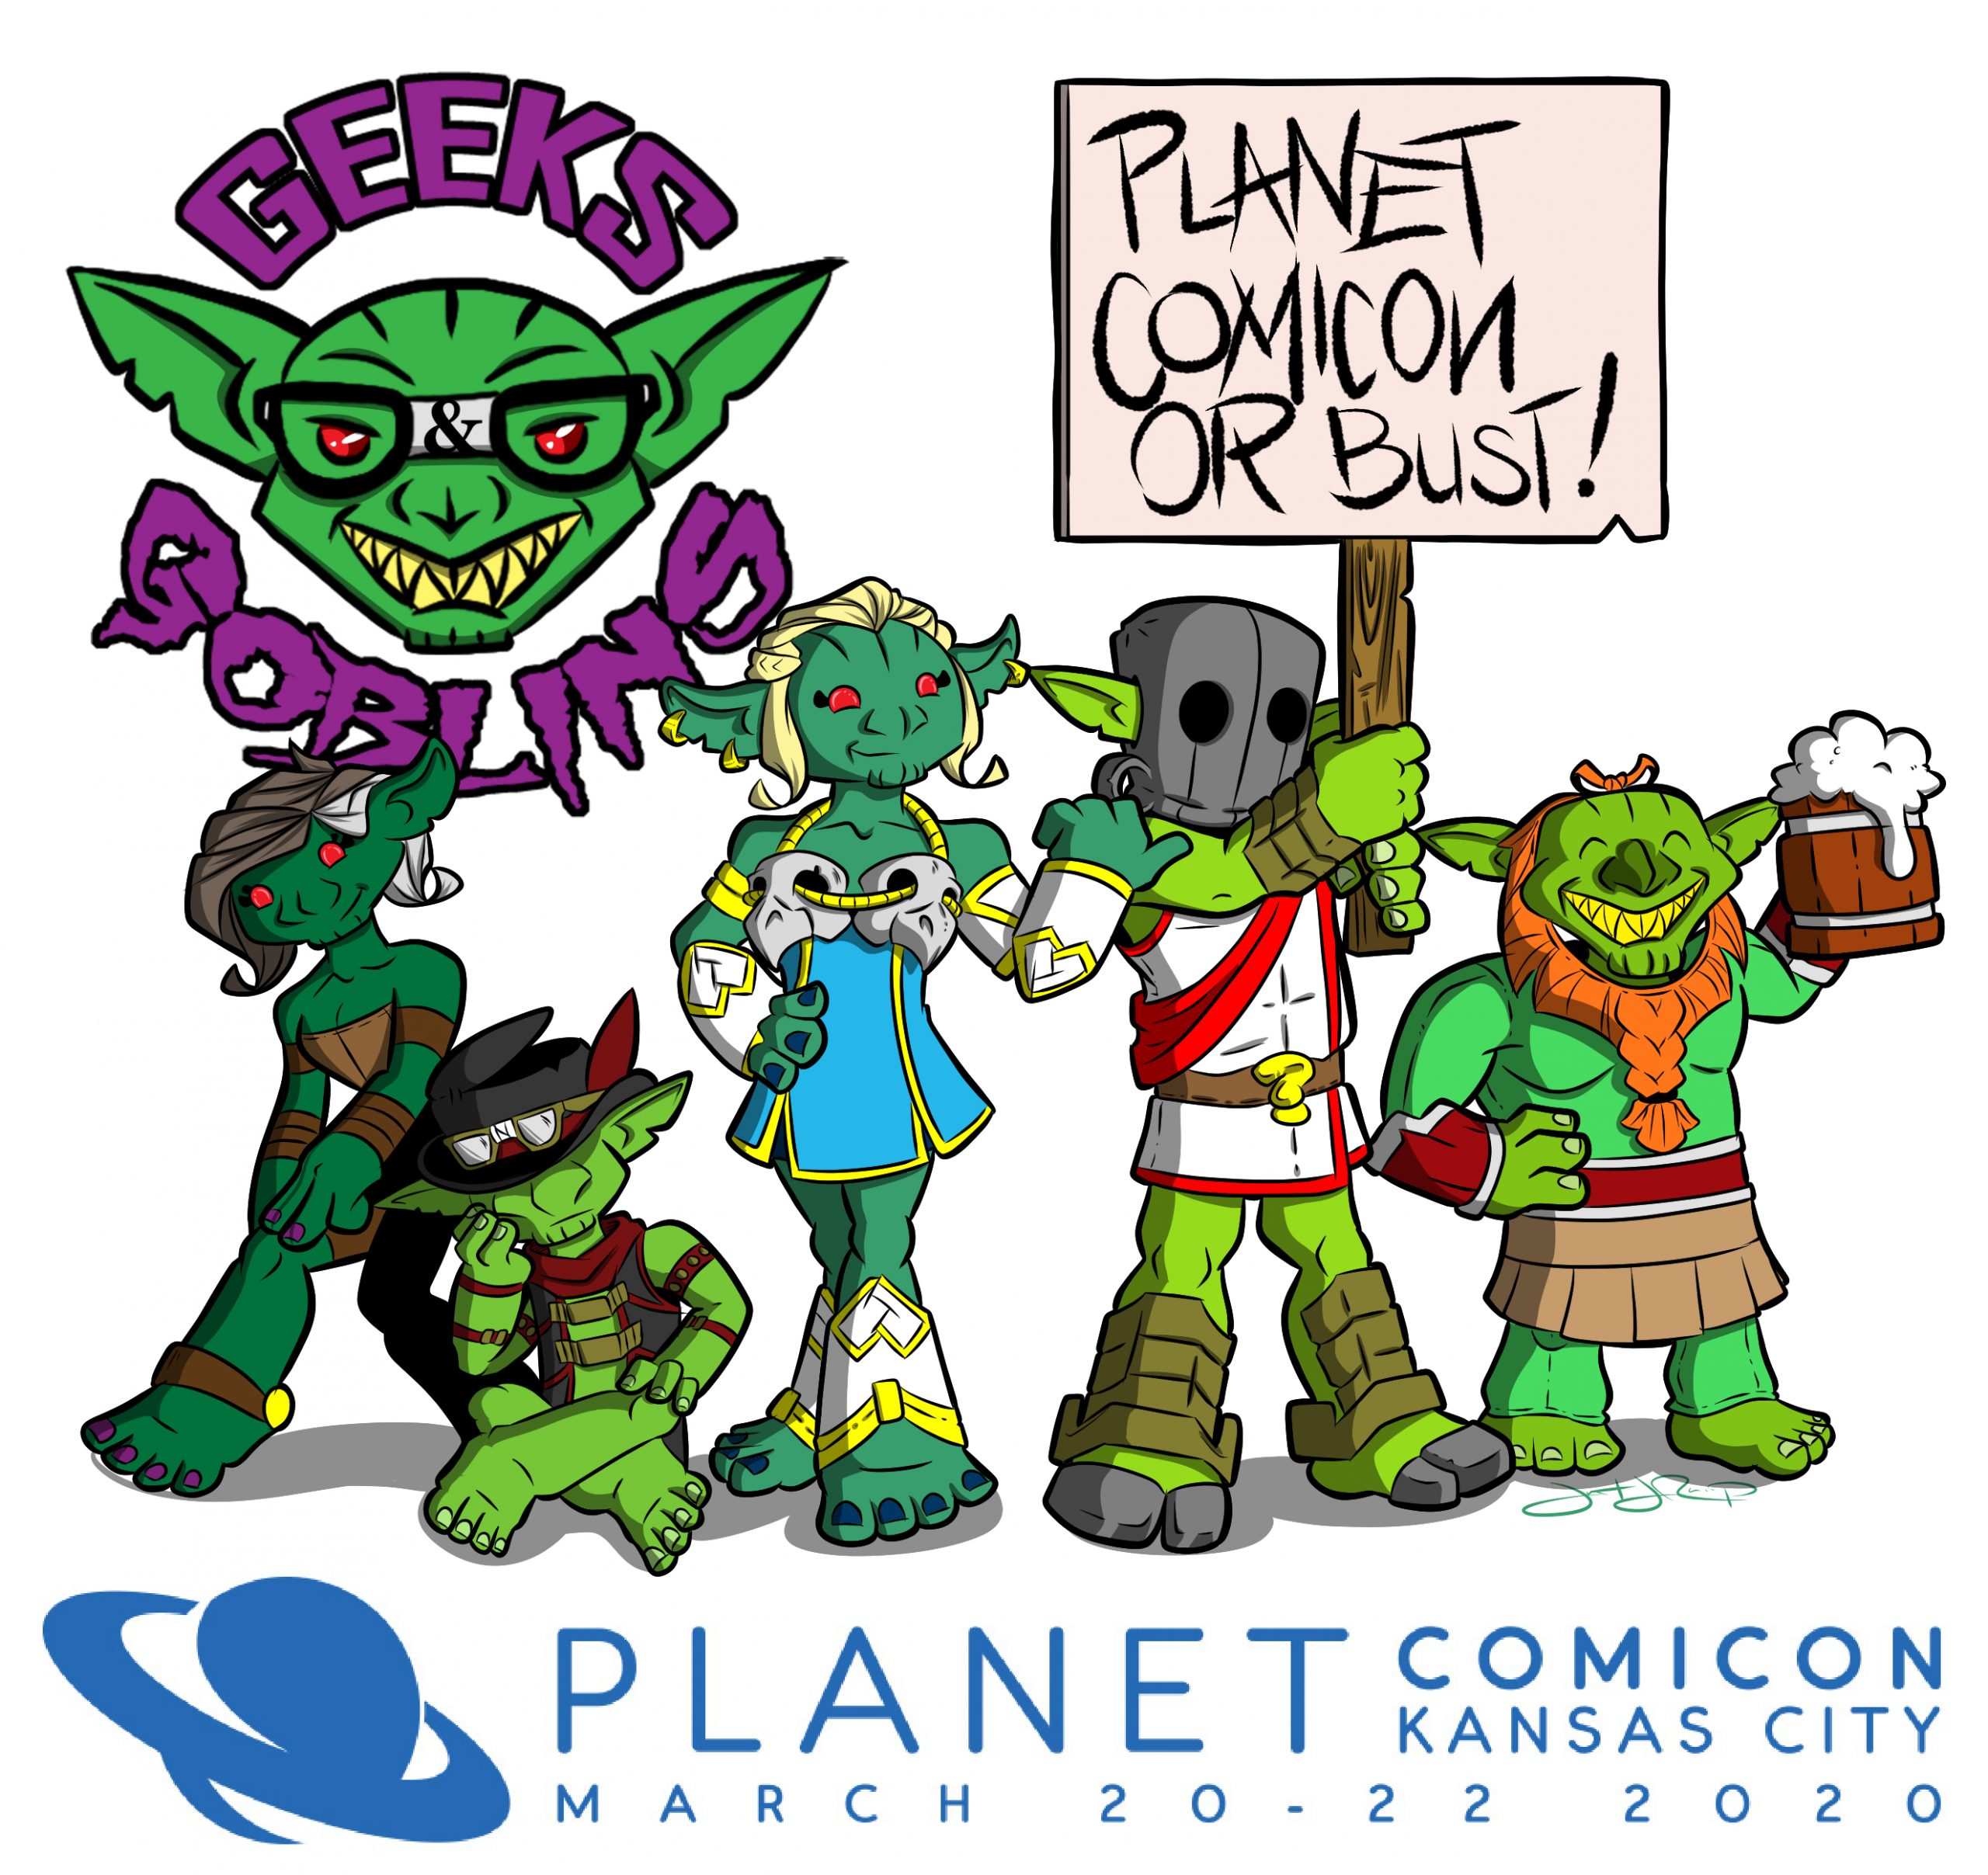 Geeks & Goblins @ Planet Comicon 2020